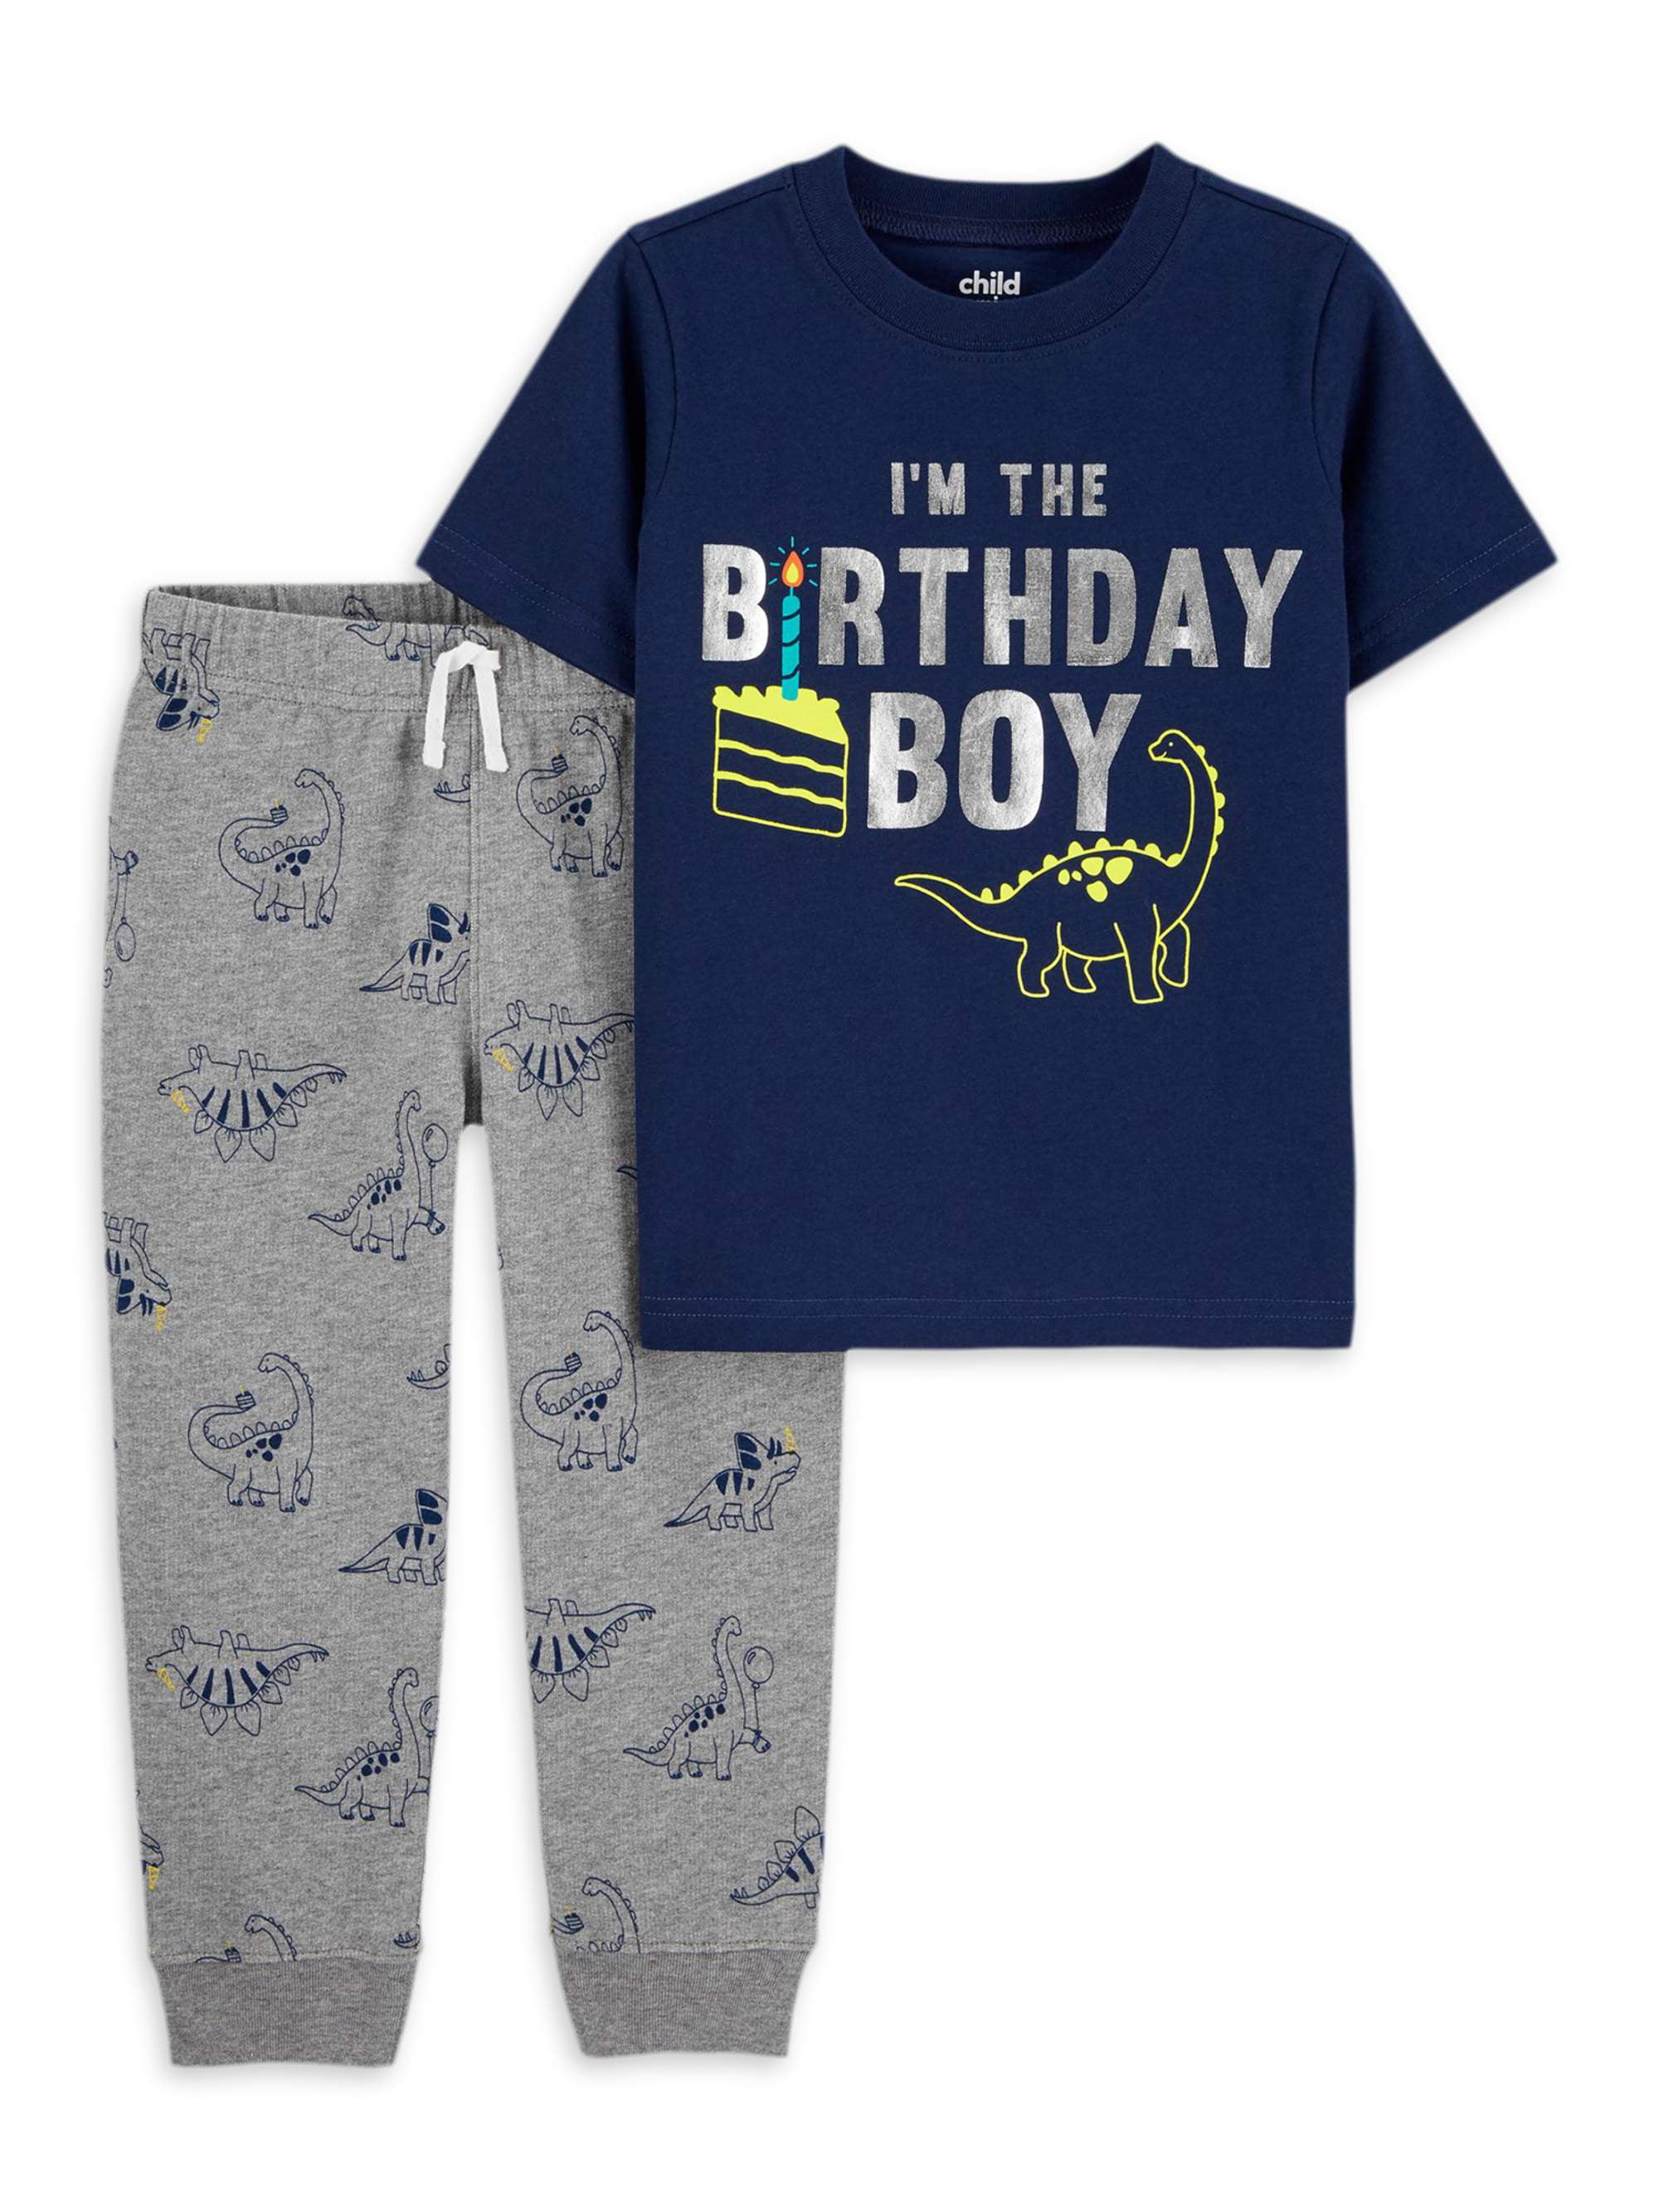 2 PCS Cotton Toddler baby boys outfits T shirt tops+pants kid Clothes Batman set 